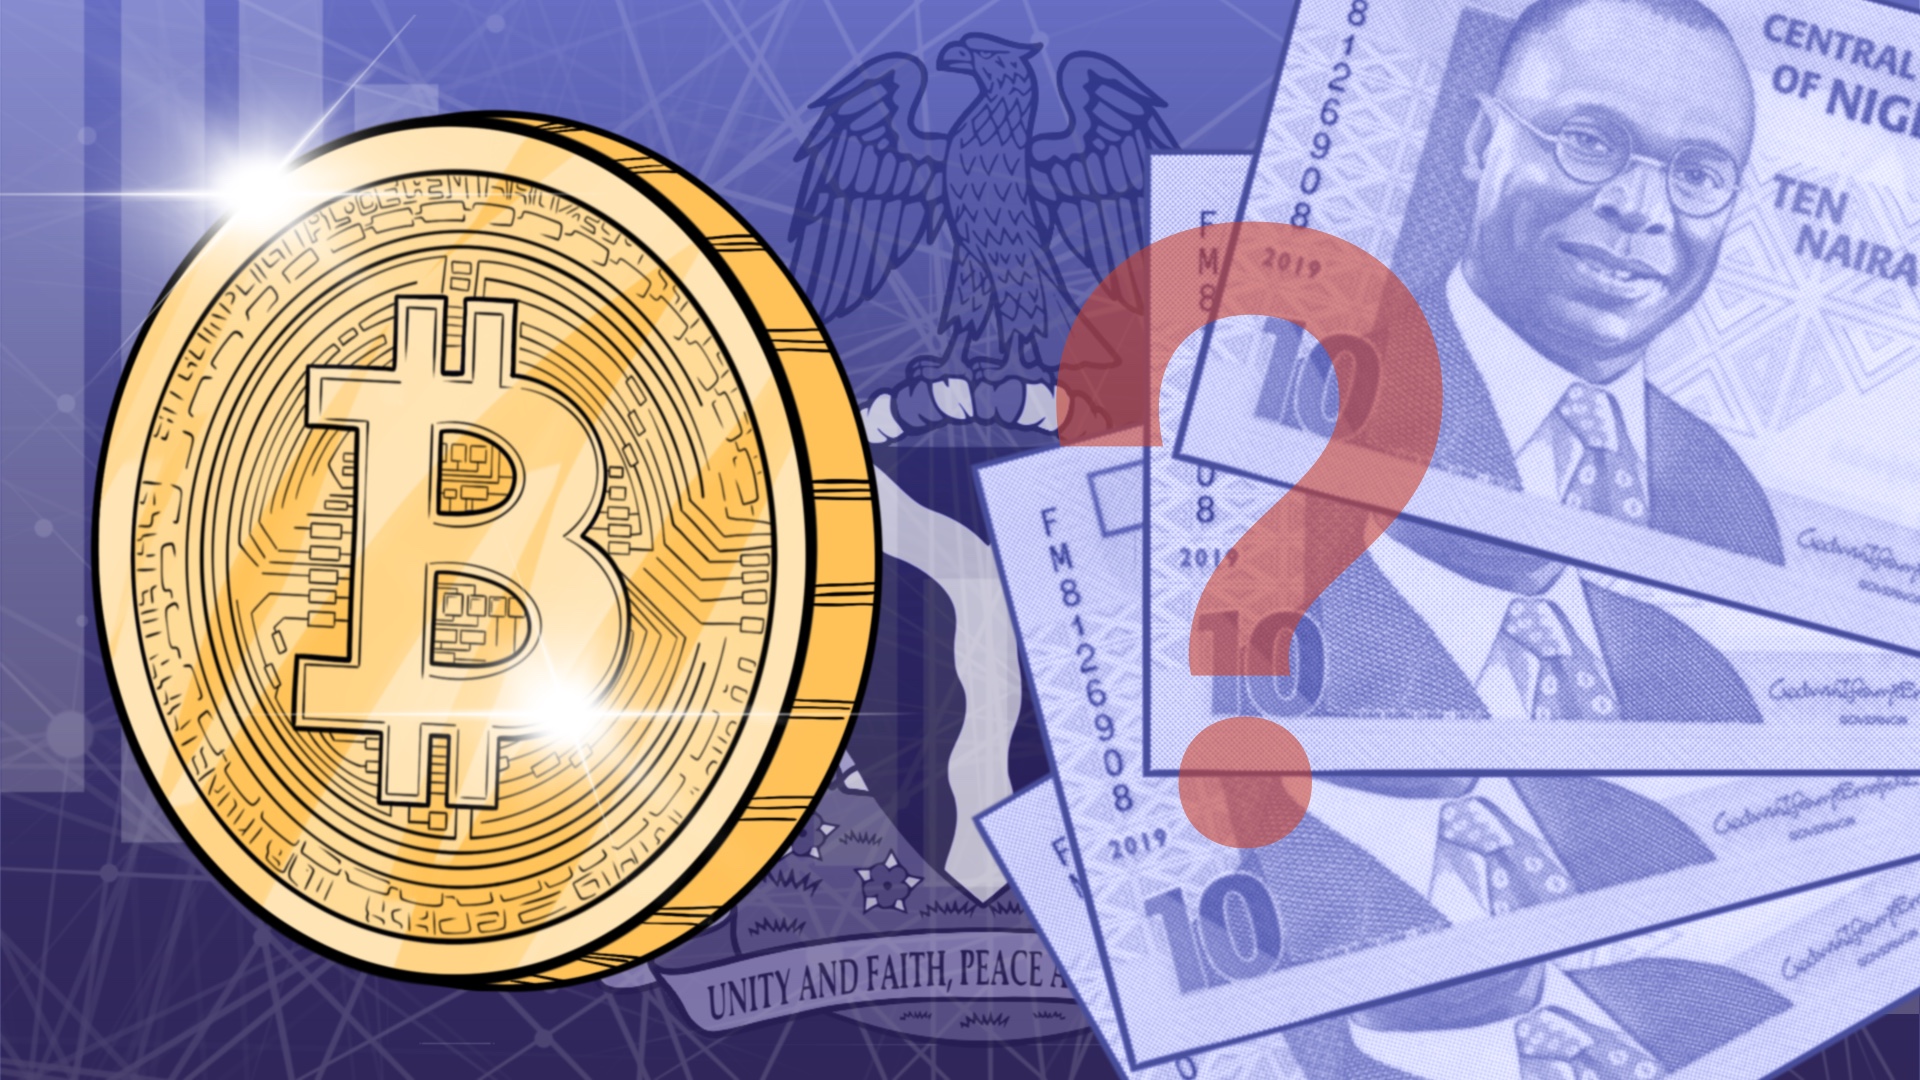 Sell Bitcoin in Nigeria: The Ultimate Guide to Trading Bitcoin in Nigeria